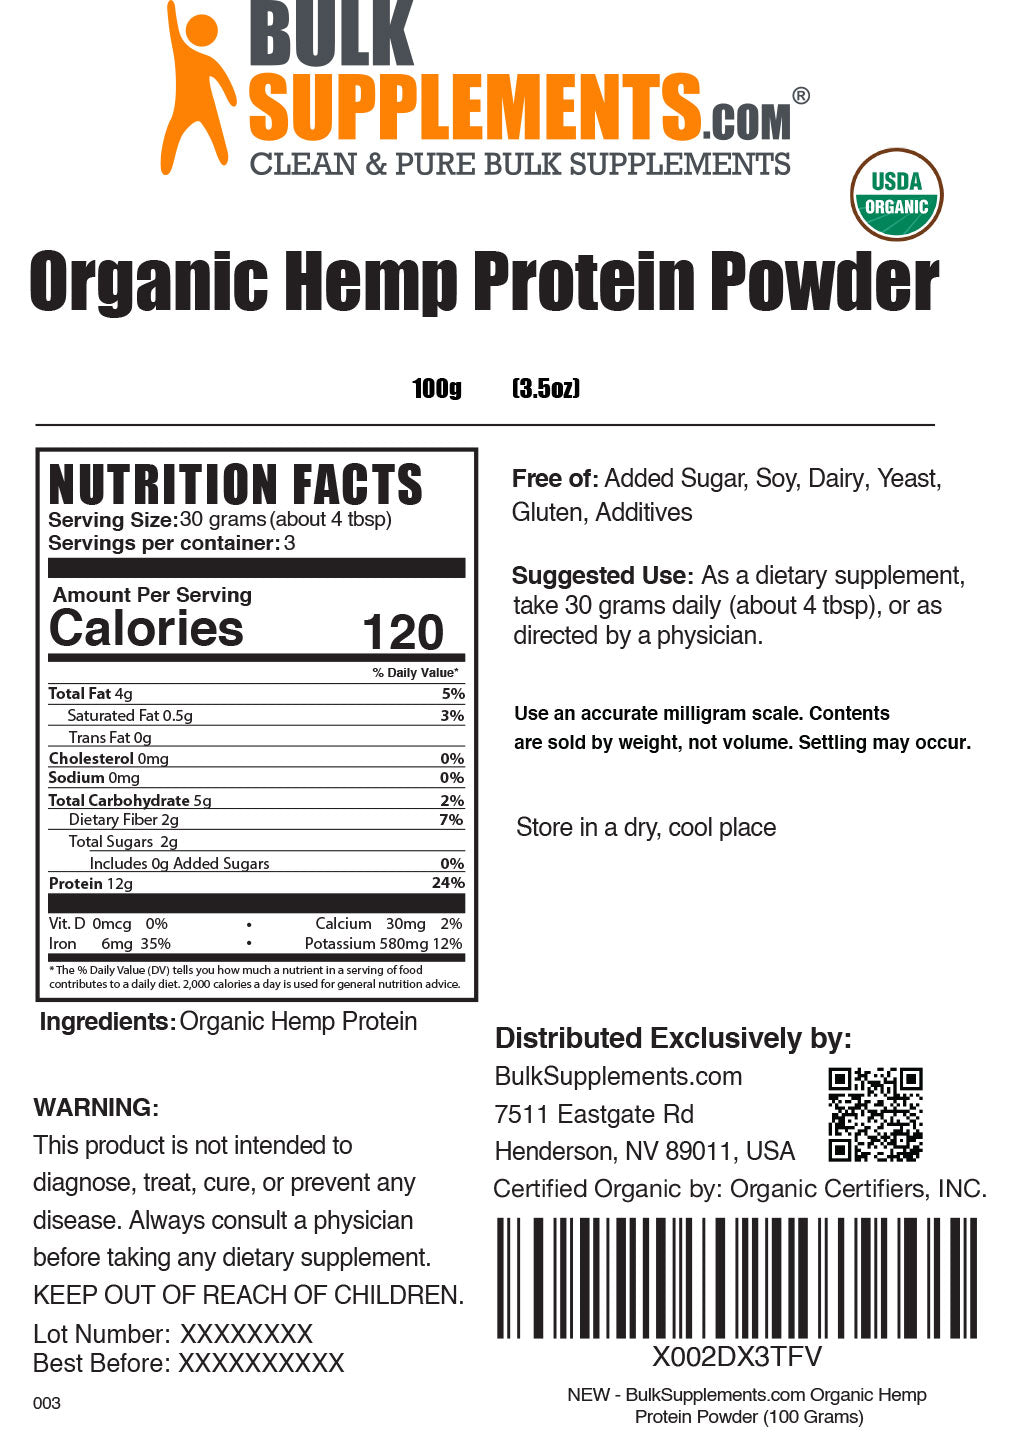 Organic hemp seed protein powder label 100g